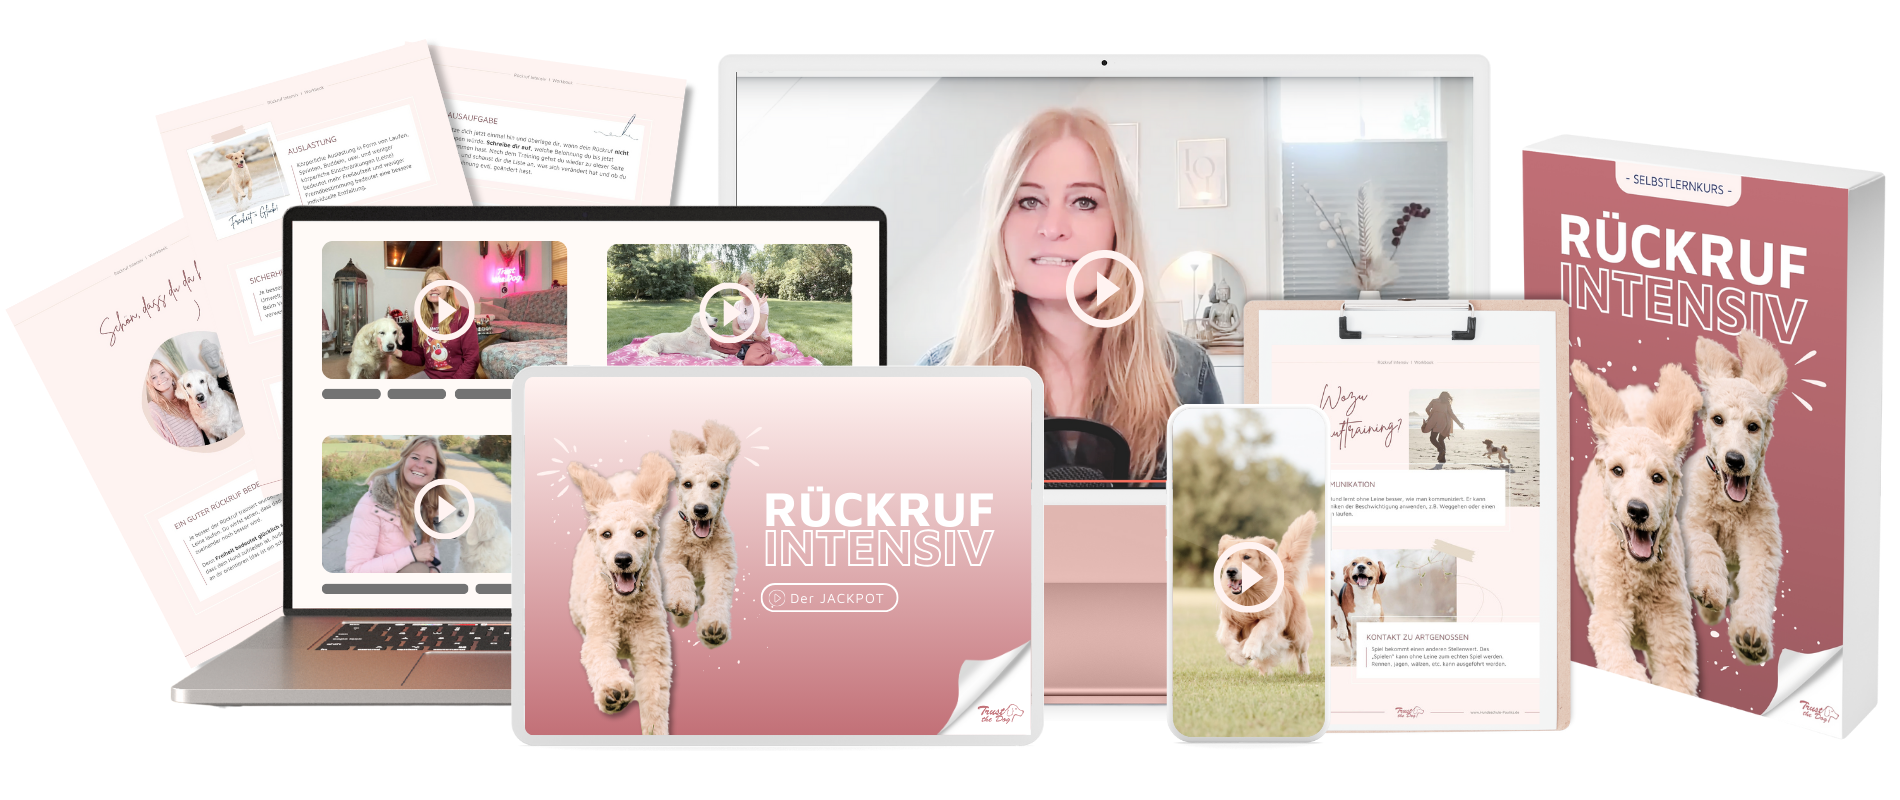 Rückrufkurs, Onlinehundeschule, Onlinehundetraining, Hundeschule, Hundetraining, Trust the dog, Claudia Pauliks, Online Hundeclub, Rückruftraining, Cllaudia Pauliks